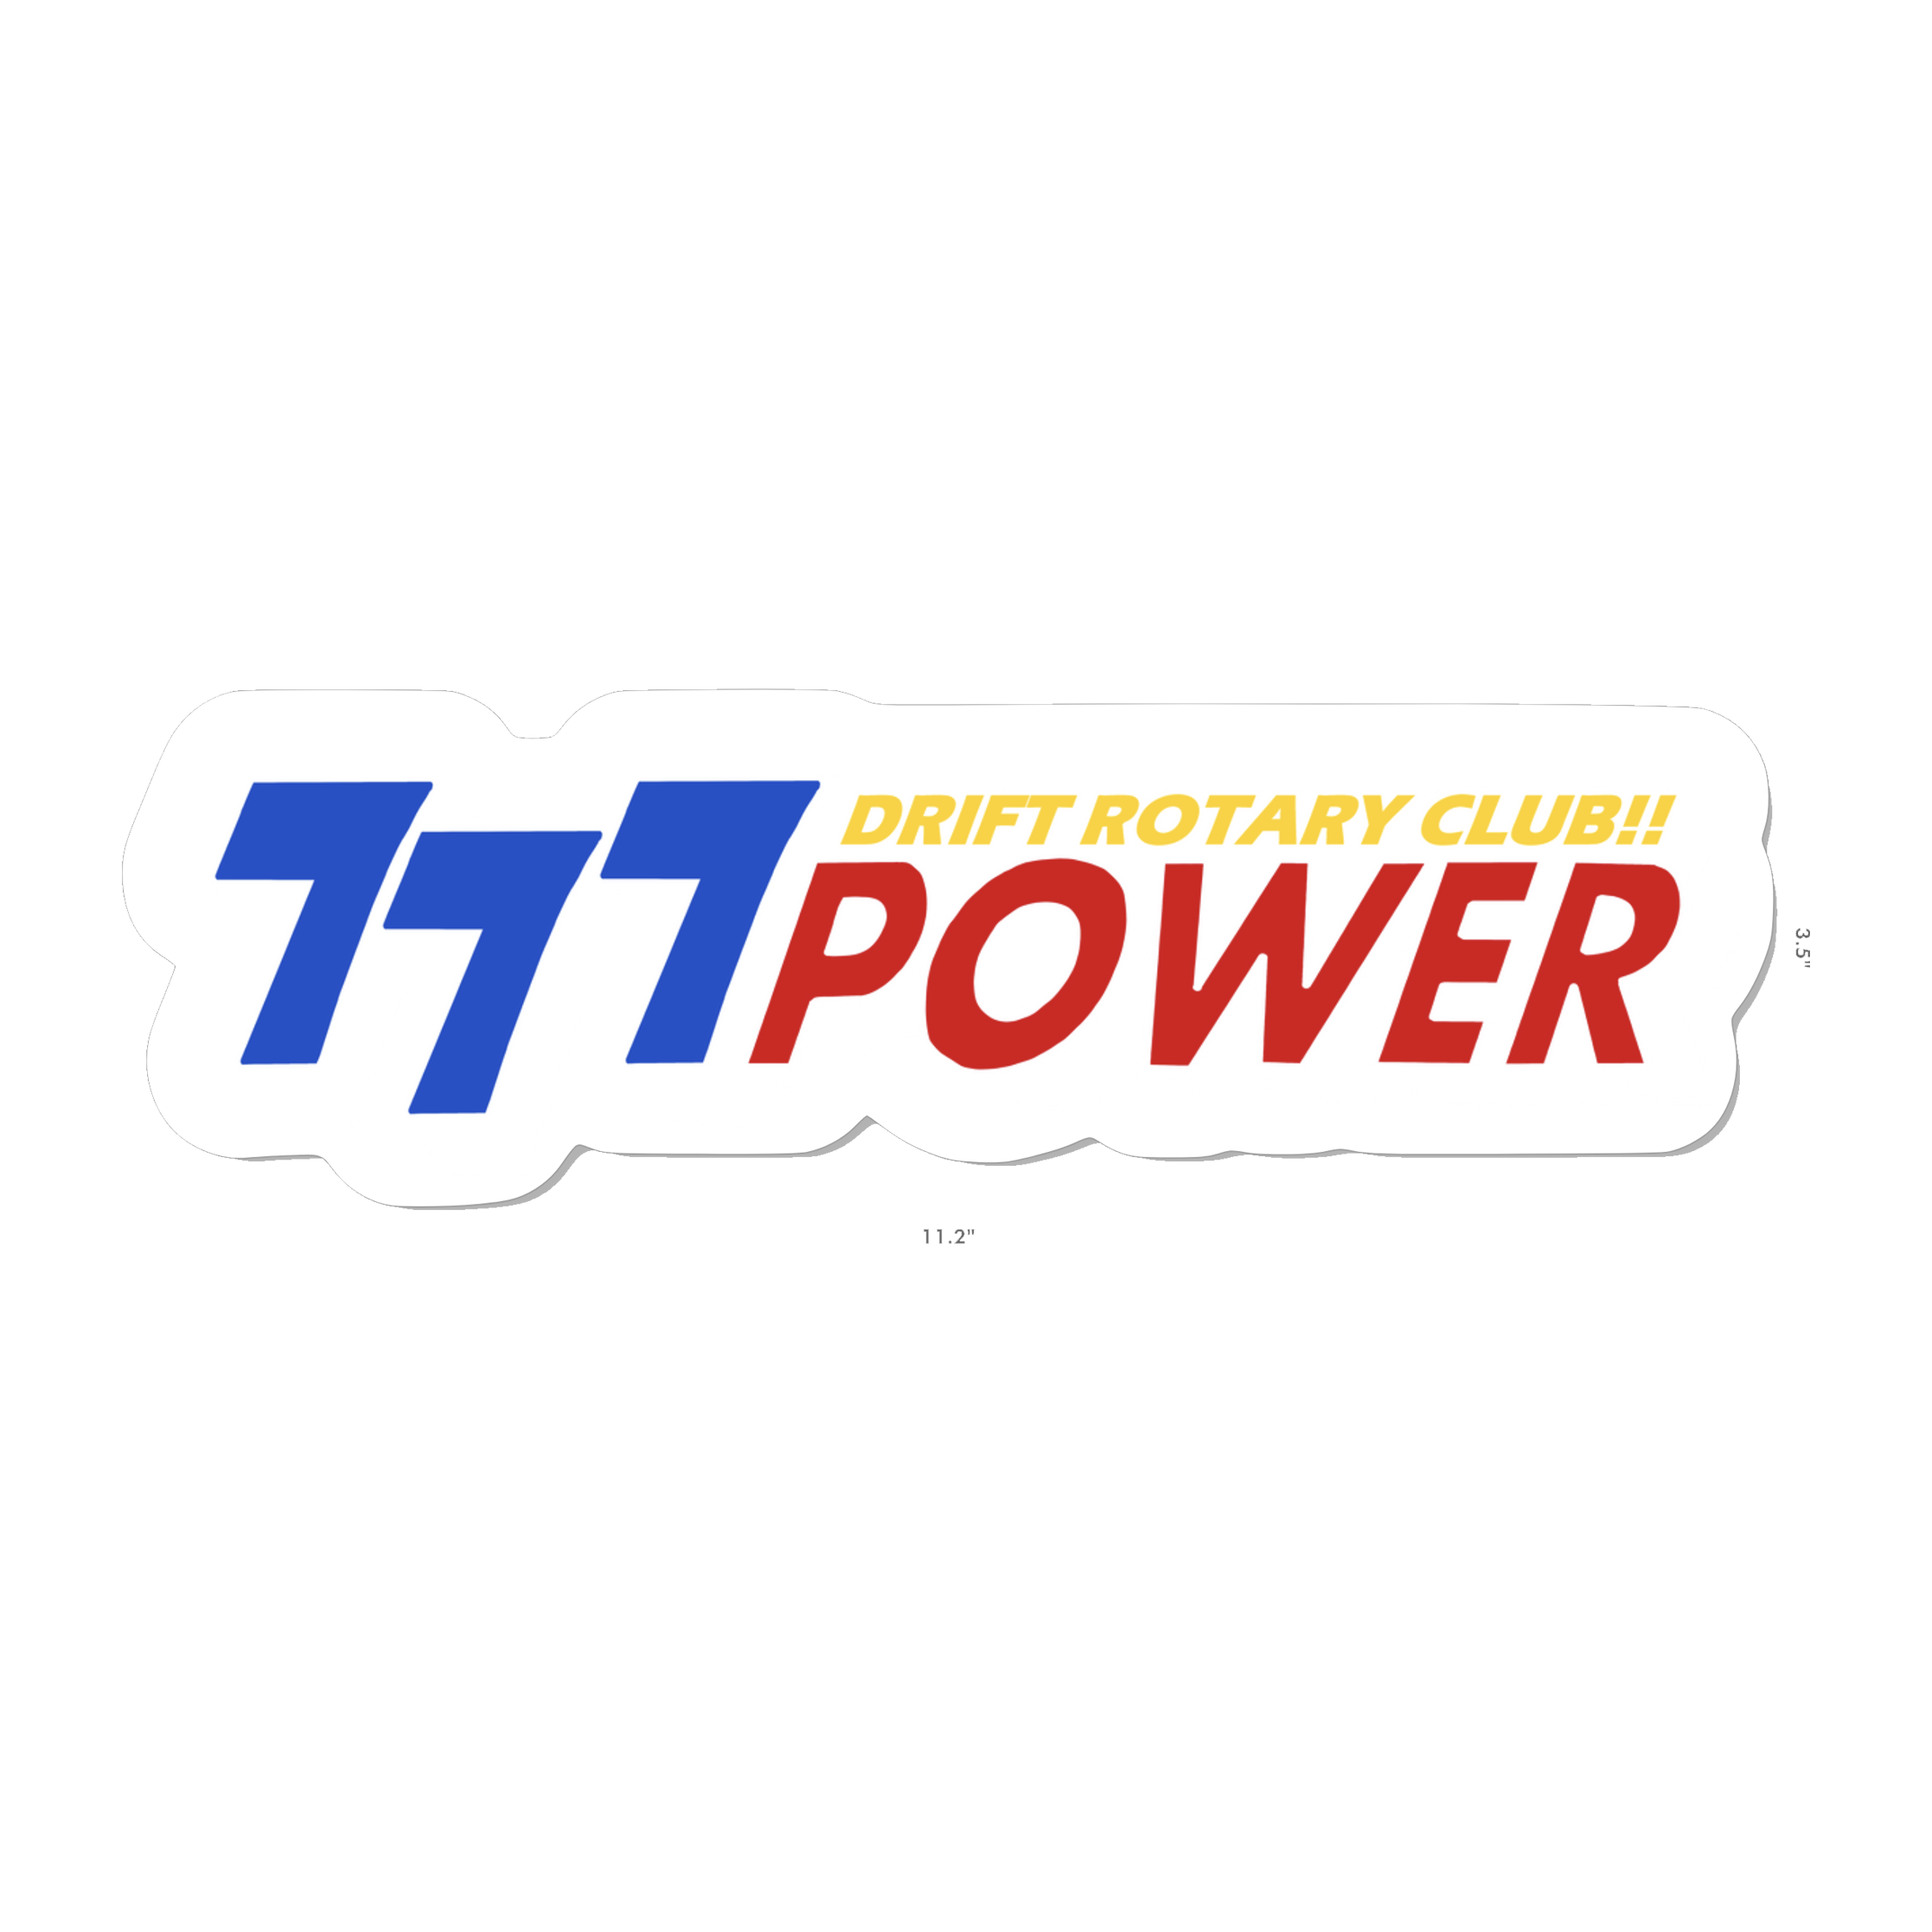 777 POWER STICKERS